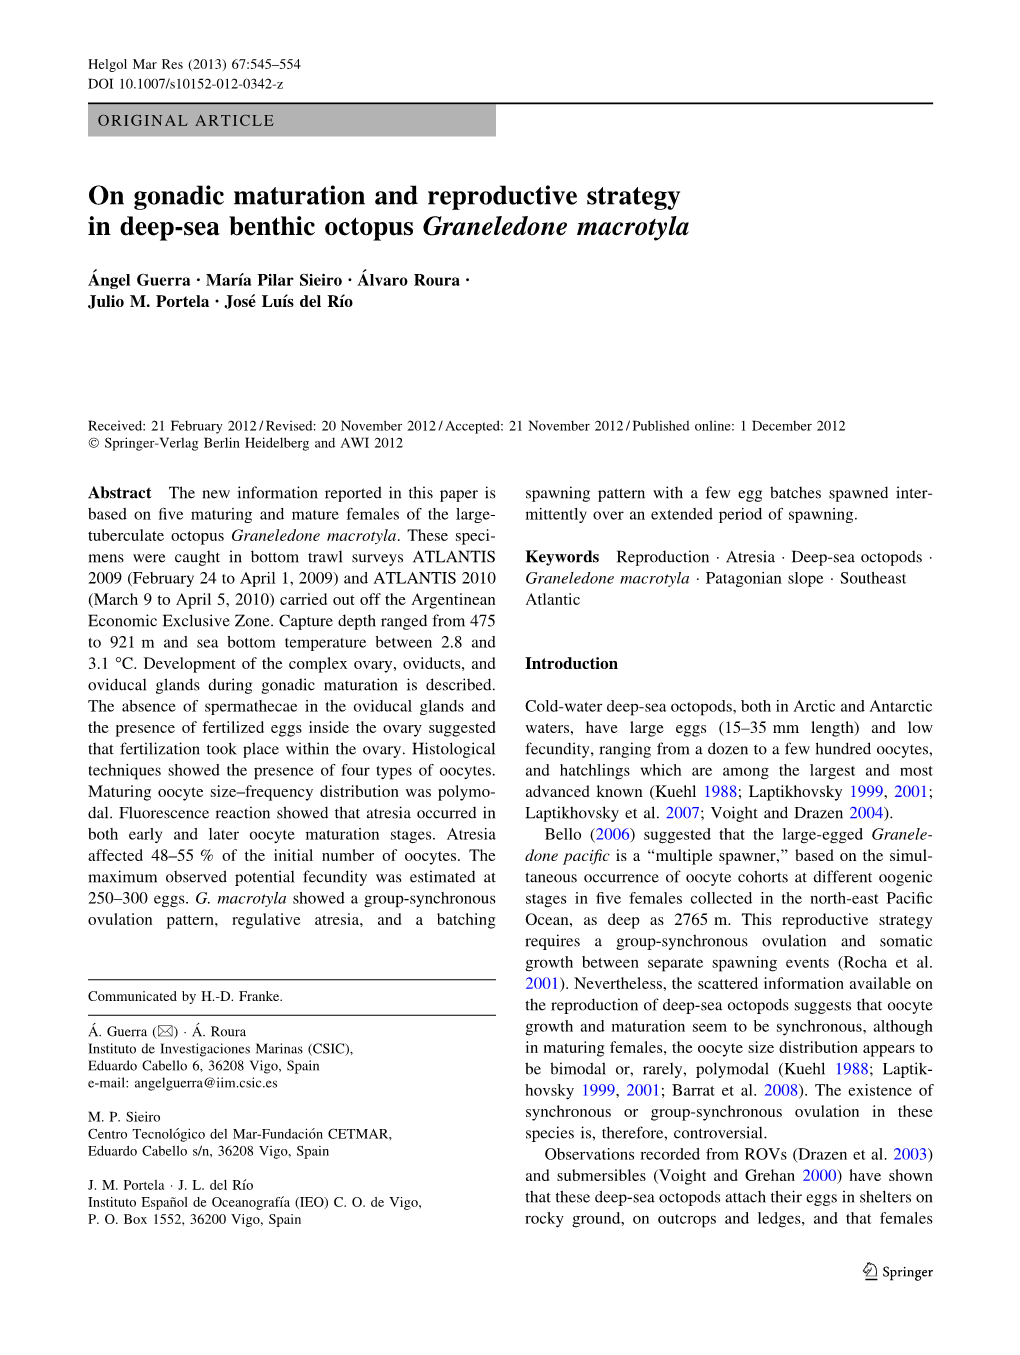 On Gonadic Maturation and Reproductive Strategy in Deep-Sea Benthic Octopus Graneledone Macrotyla